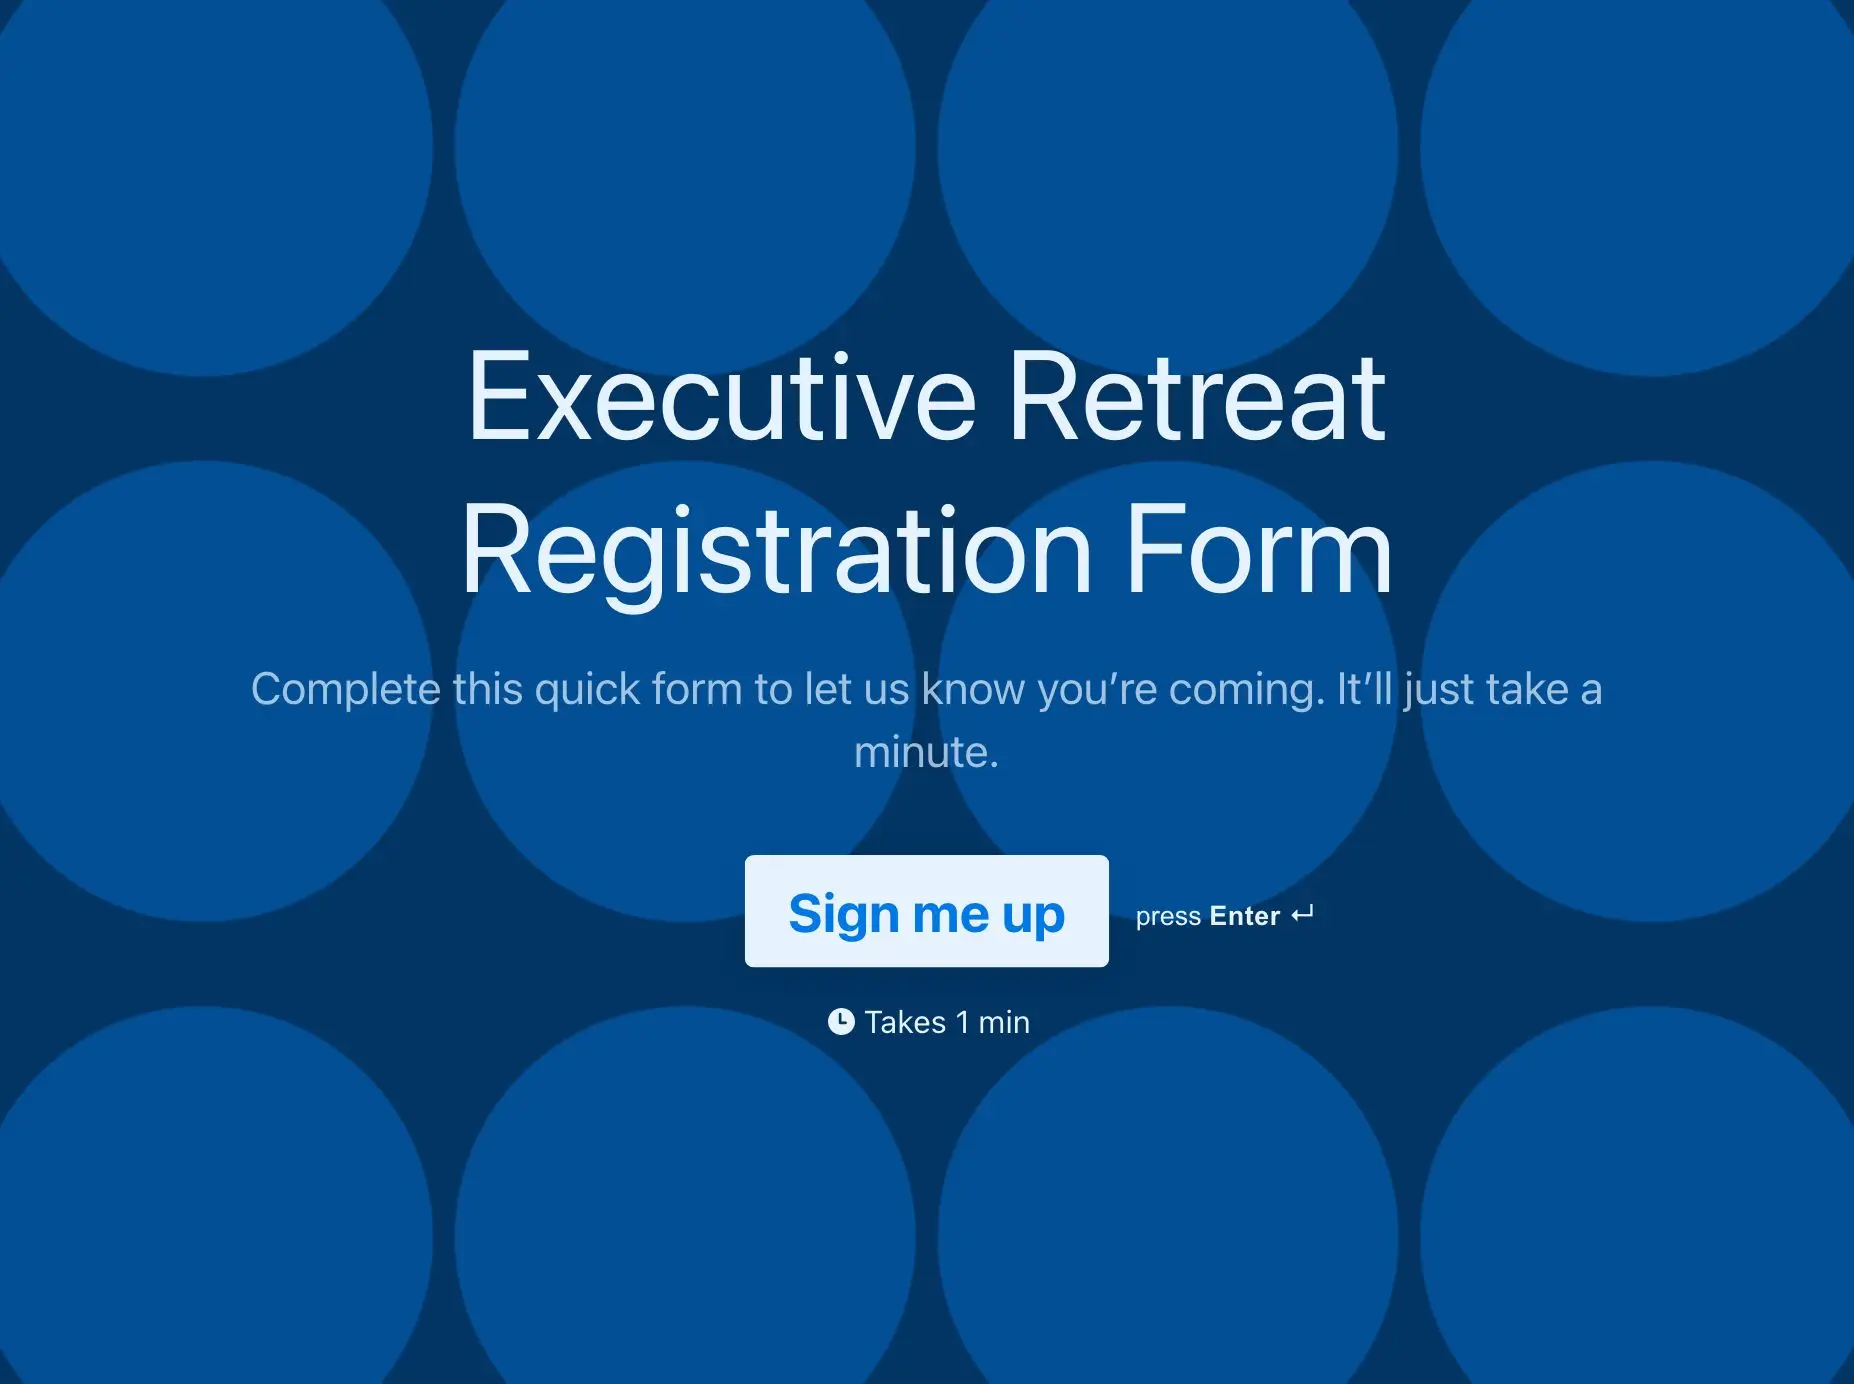 Executive Retreat Registration Form Template Hero